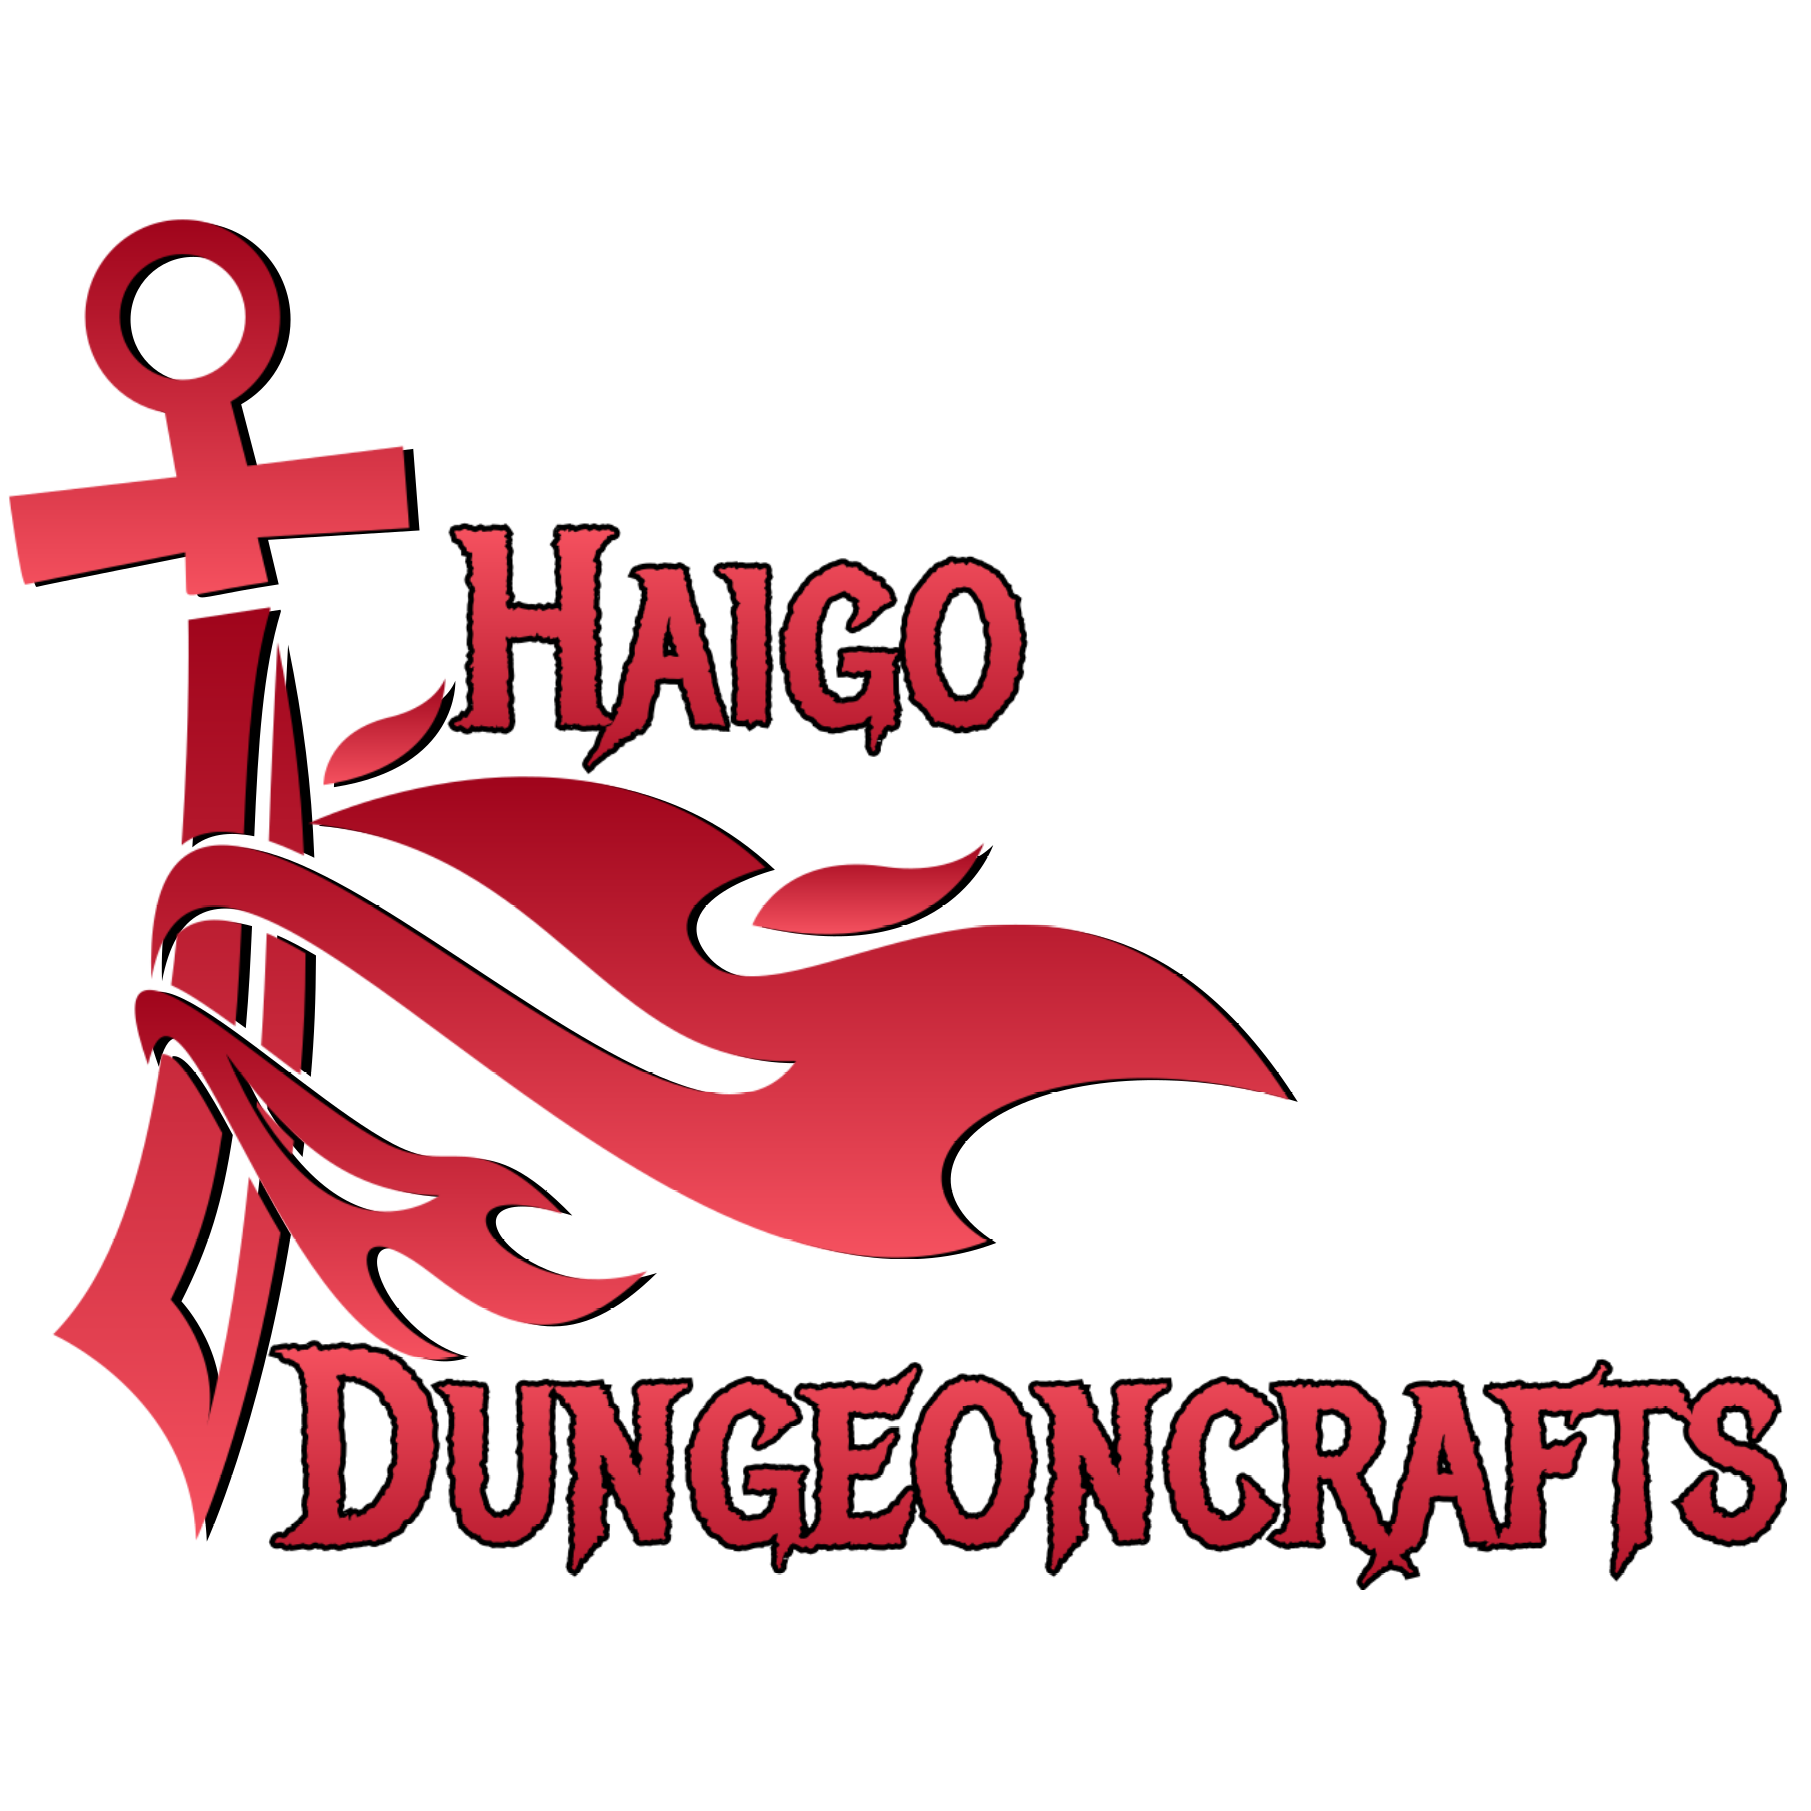 Haigo Dungeoncrafts logo